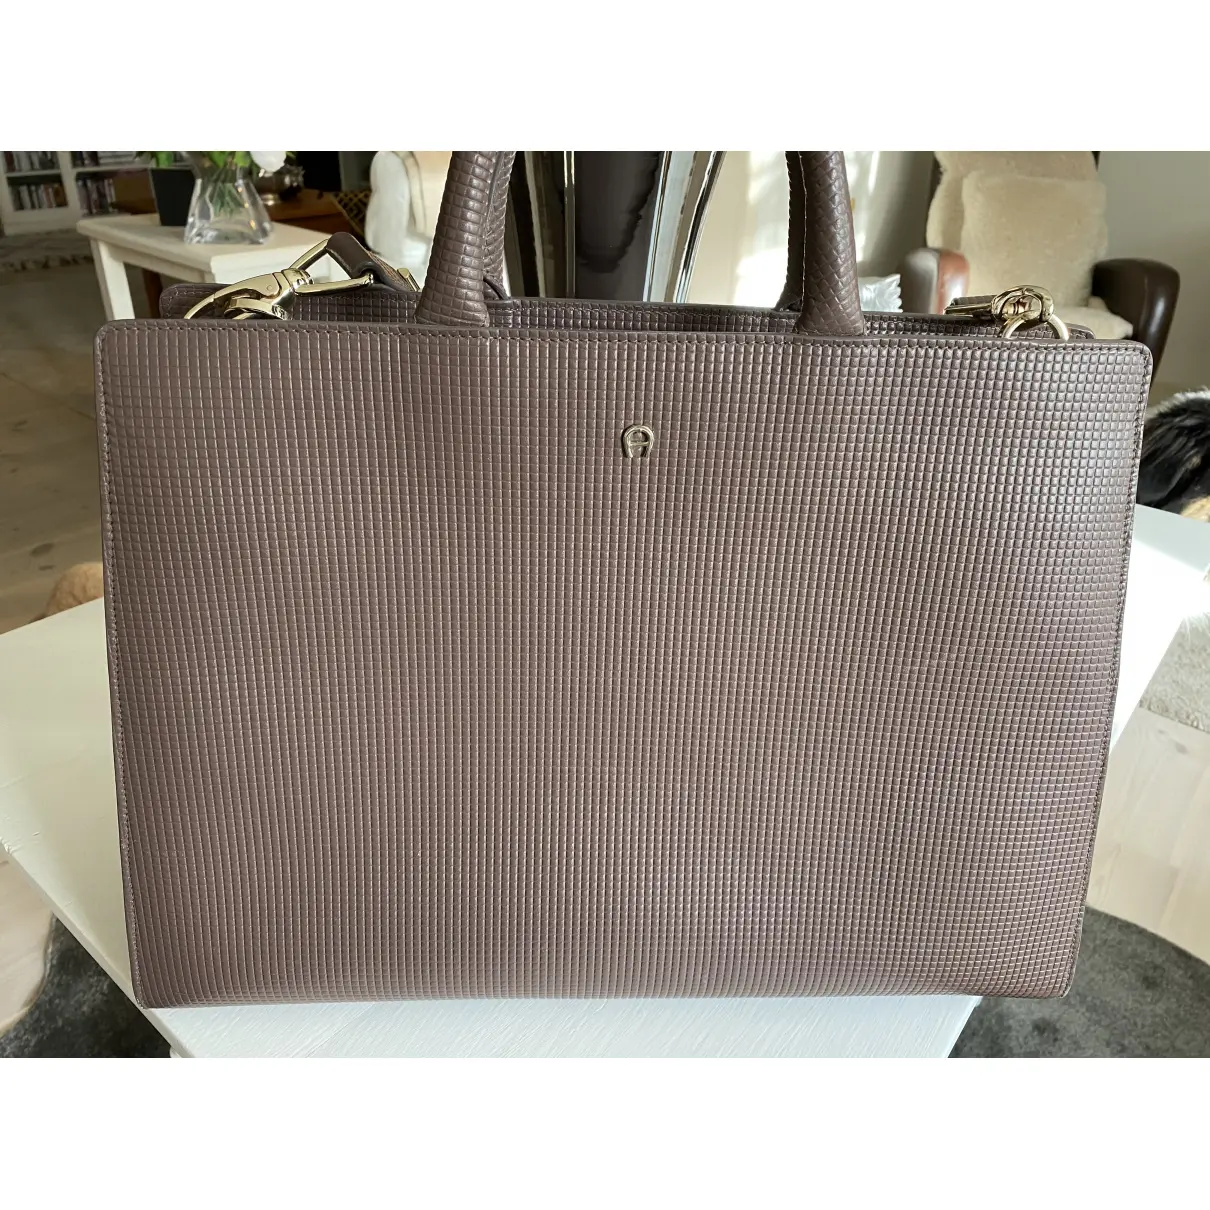 Buy Aigner Leather handbag online